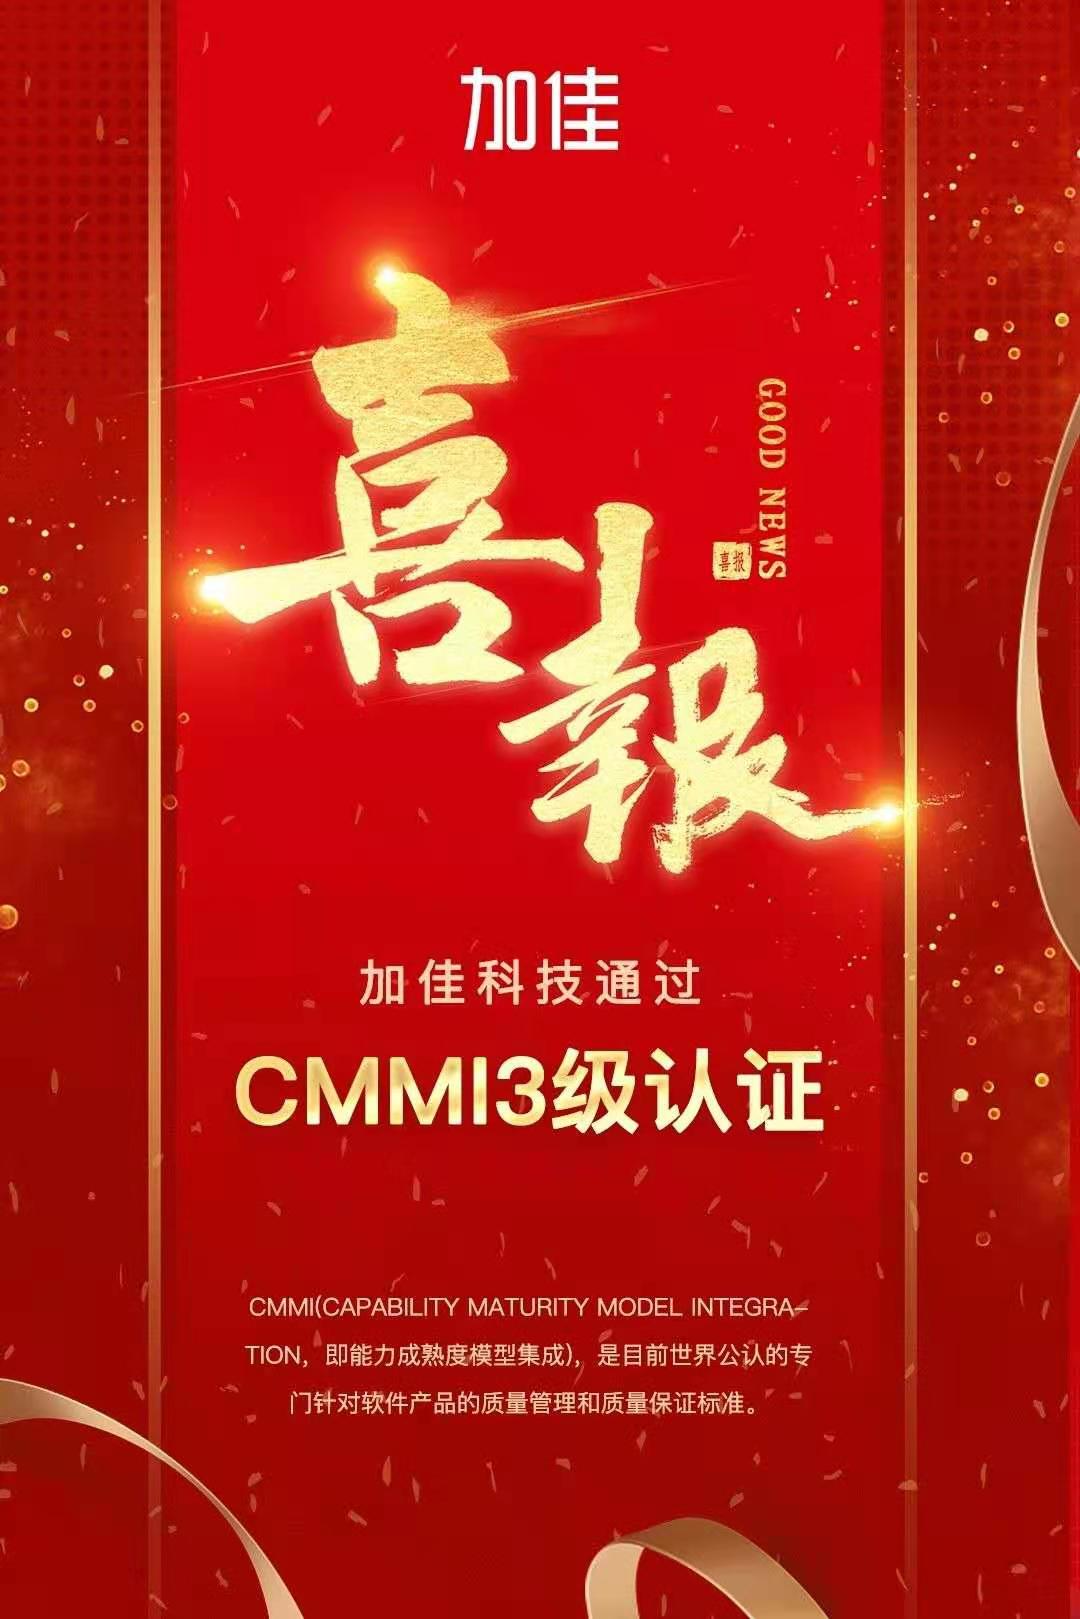 CMMI3认证.jpg